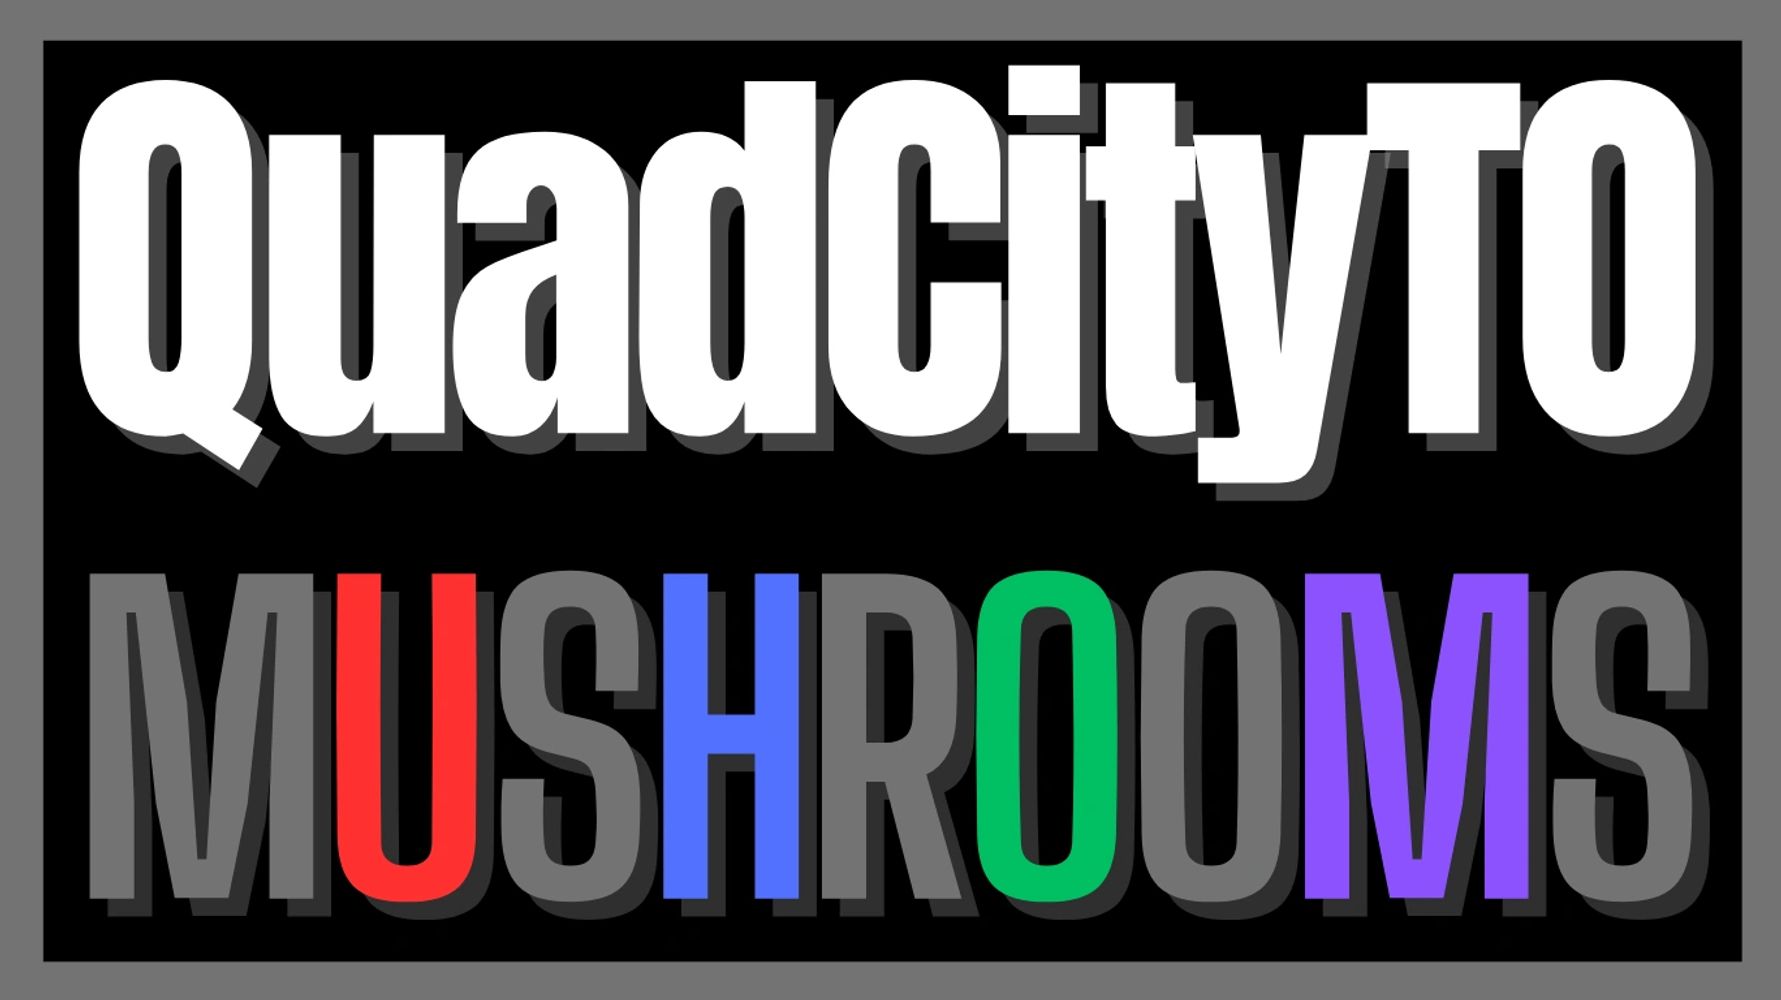 QuadCityTO Mushrooms Co.
FollowTheGreenParrot.ca
magic mushrooms delivery
shroom delivery toronto